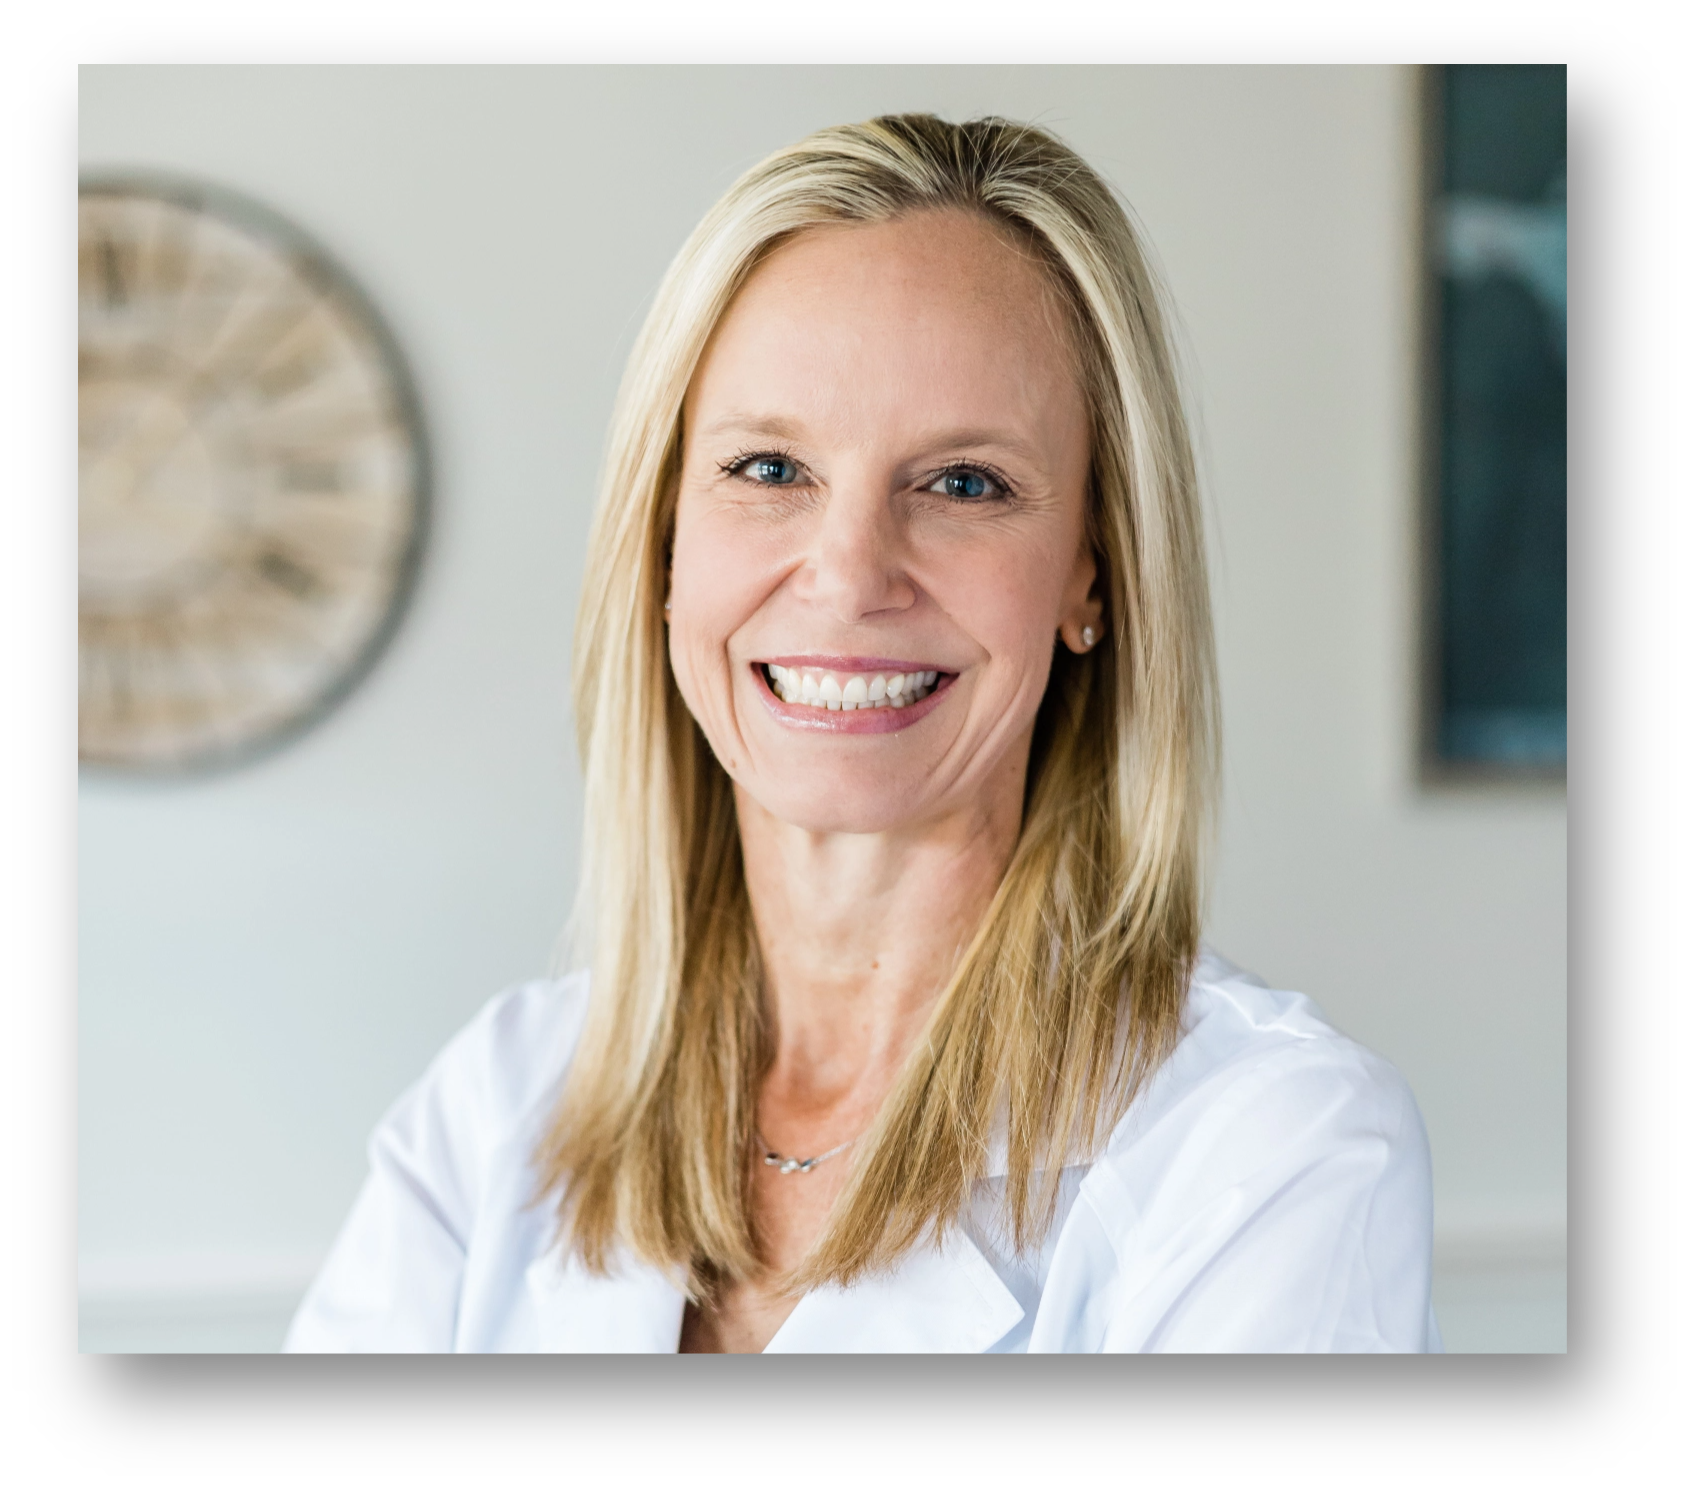 telehealth expert Dr. Kara Hartl, available for interview